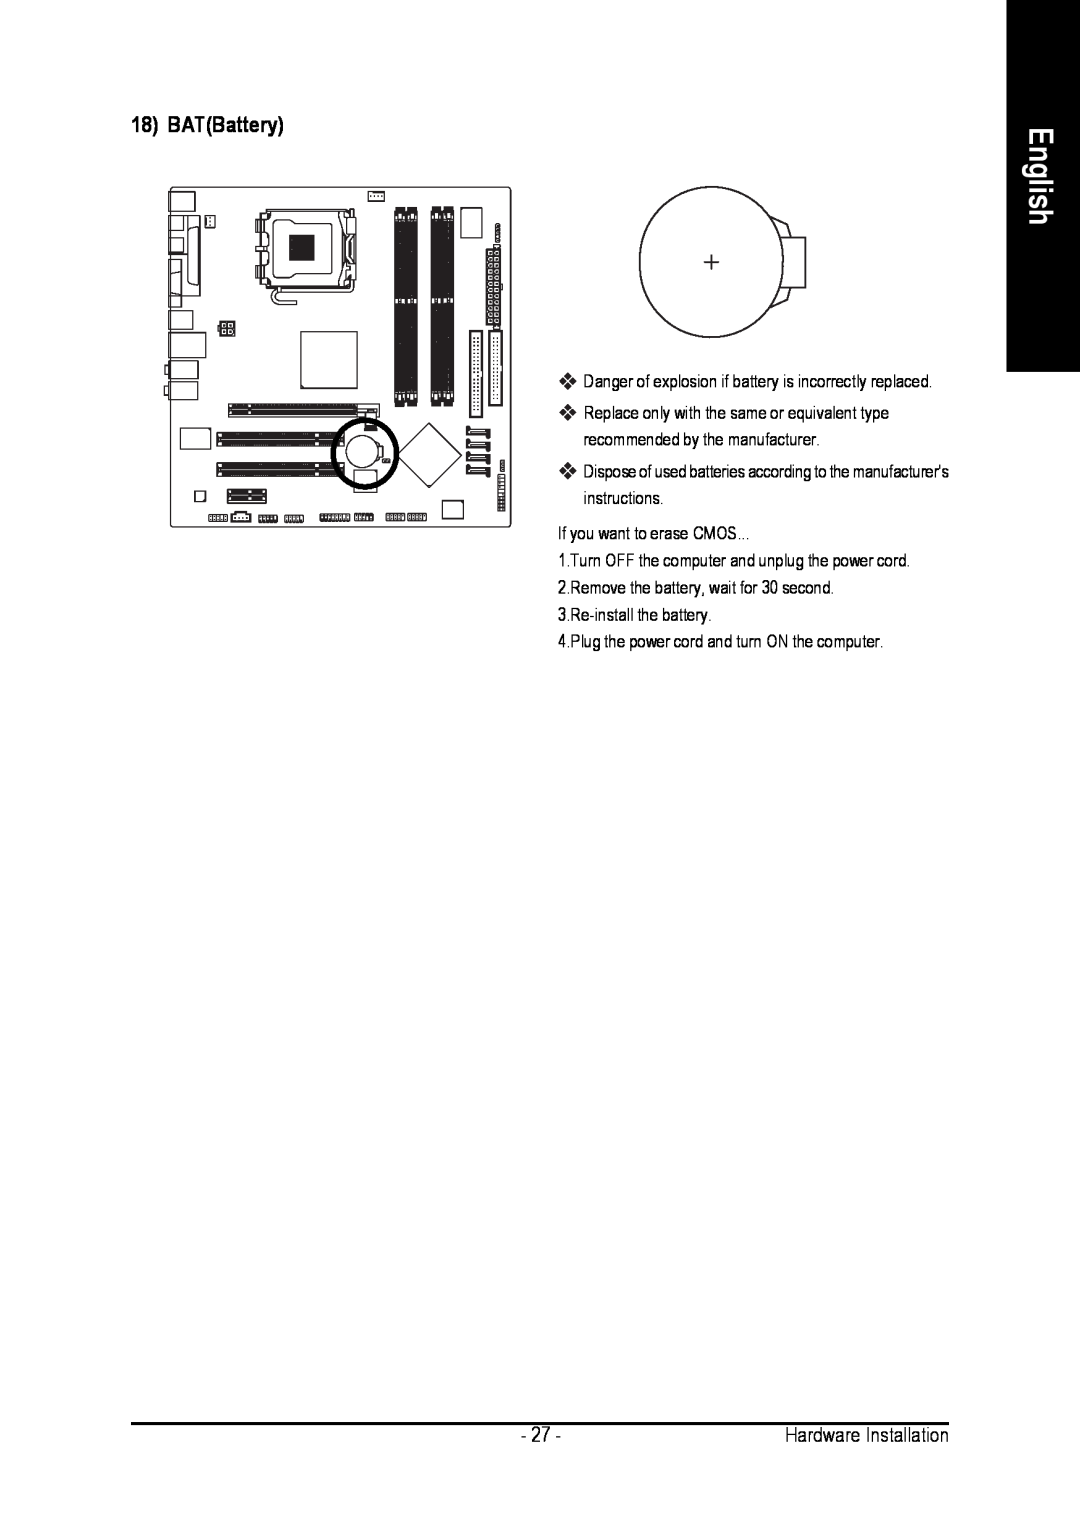 Intel GA-8I915G-MFD user manual BATBattery, English 